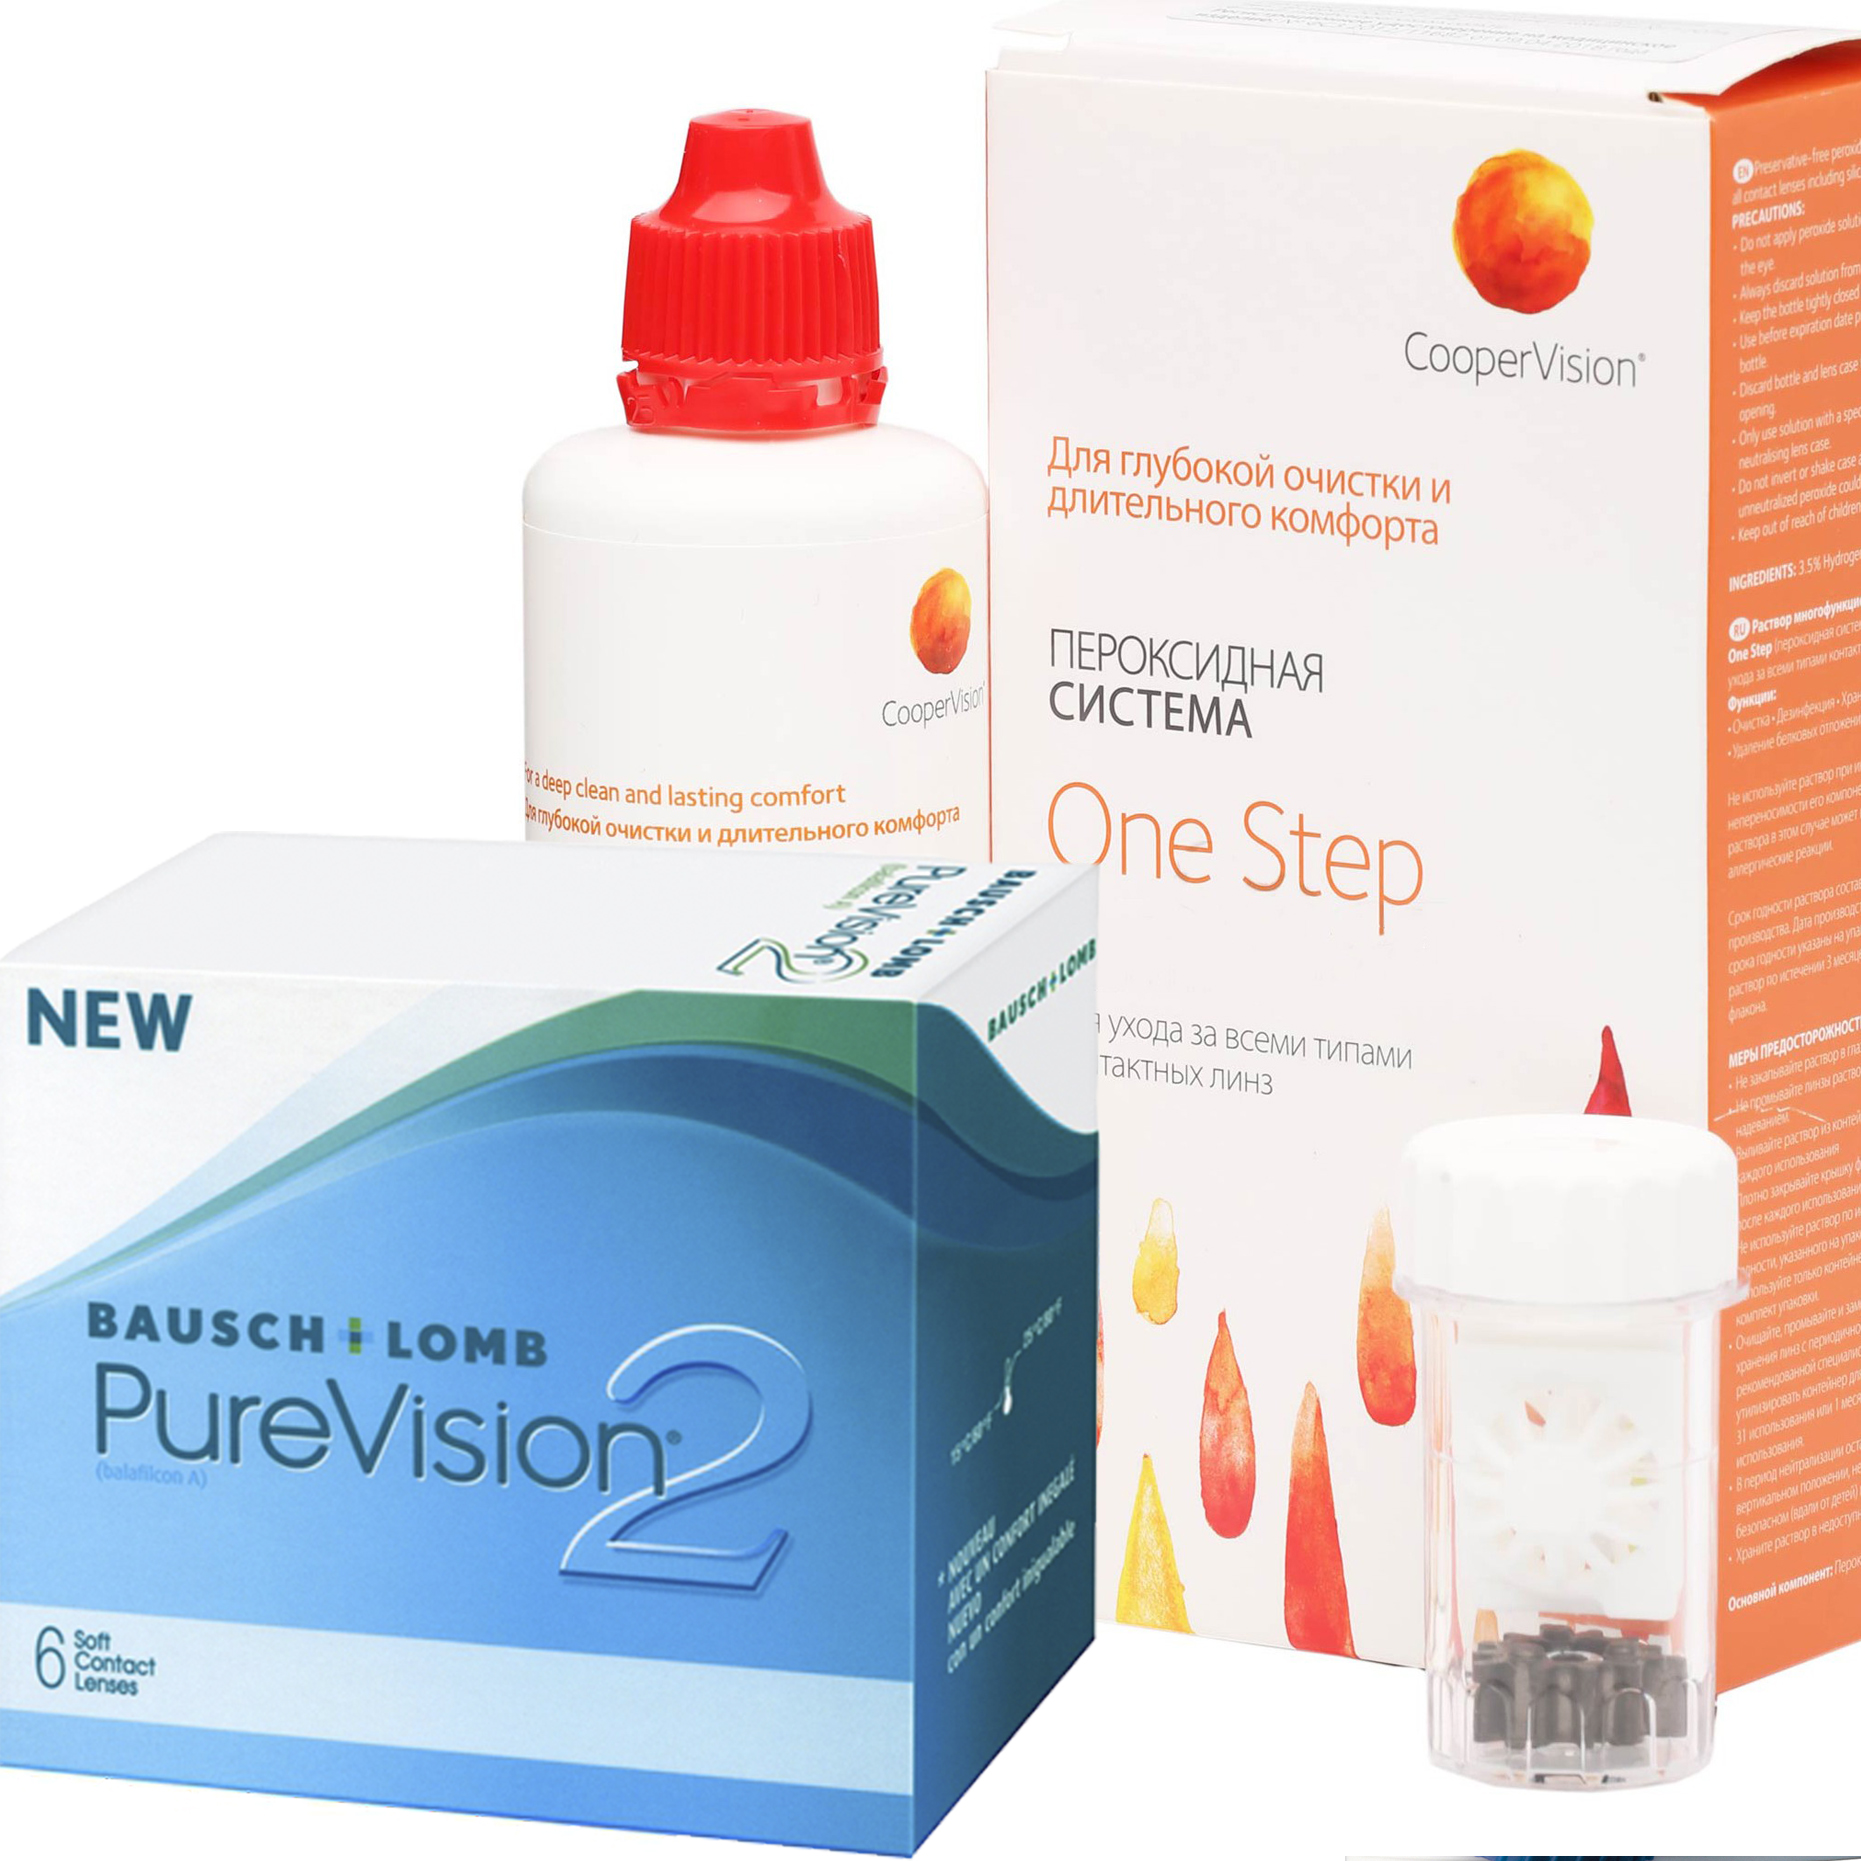 Купить PureVision 2 6 линз + One Step, Контактные линзы PureVision 2 6 линз R 8.6 -2, 75 + Раствор One Step 360 мл